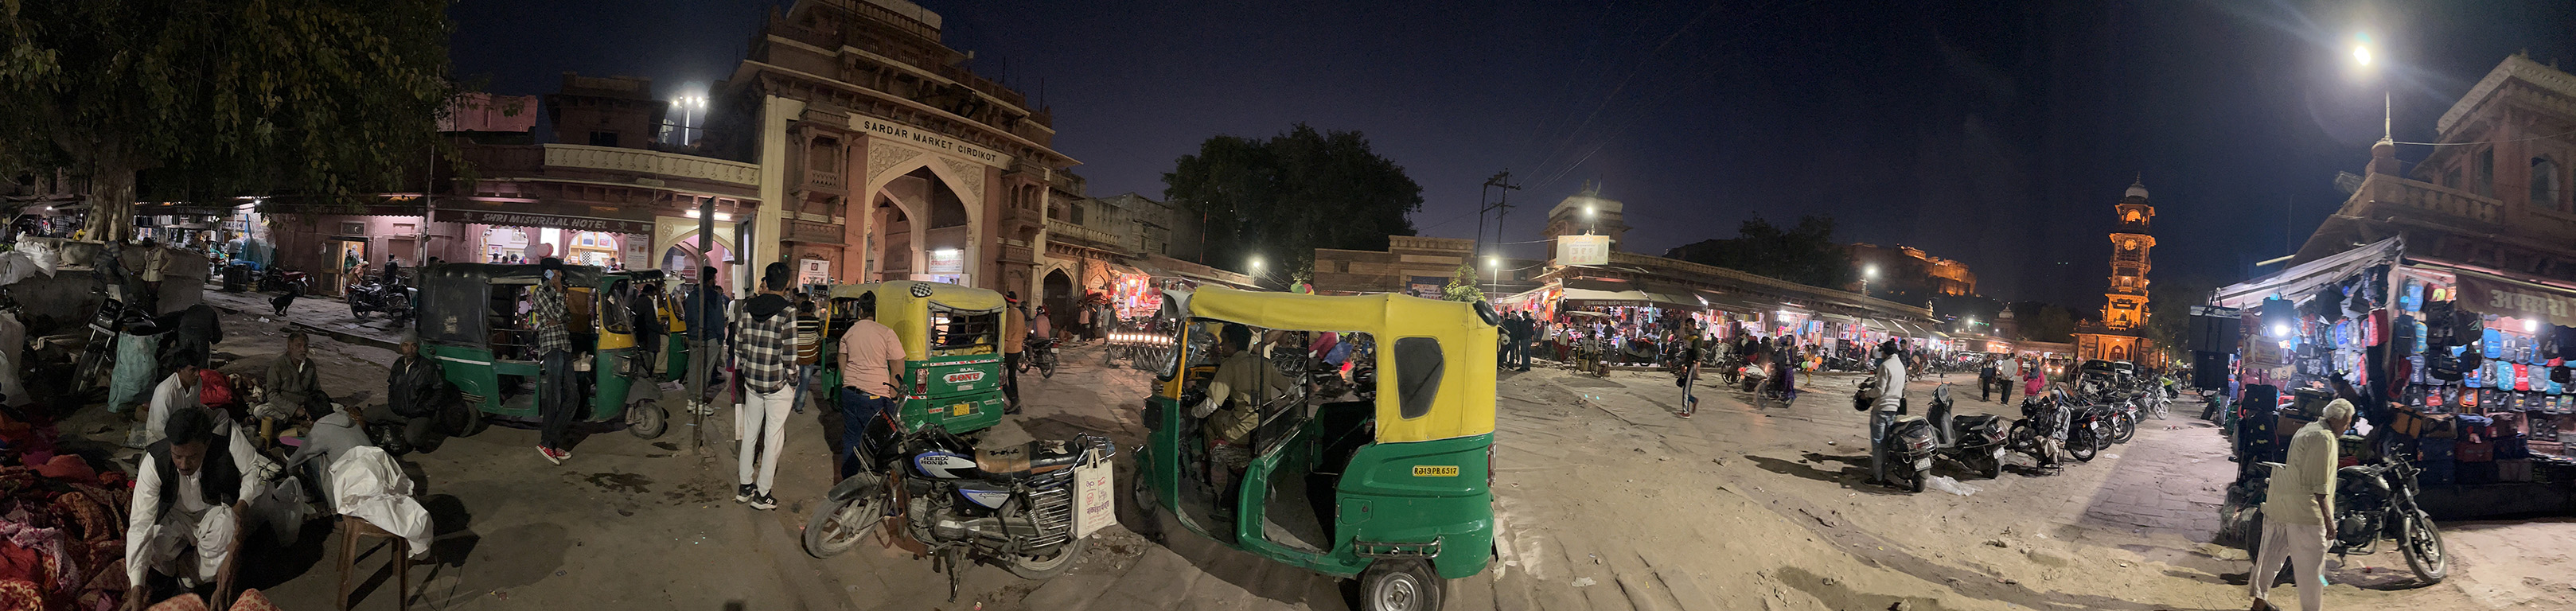 Jodhpur India Marketplace in the evening